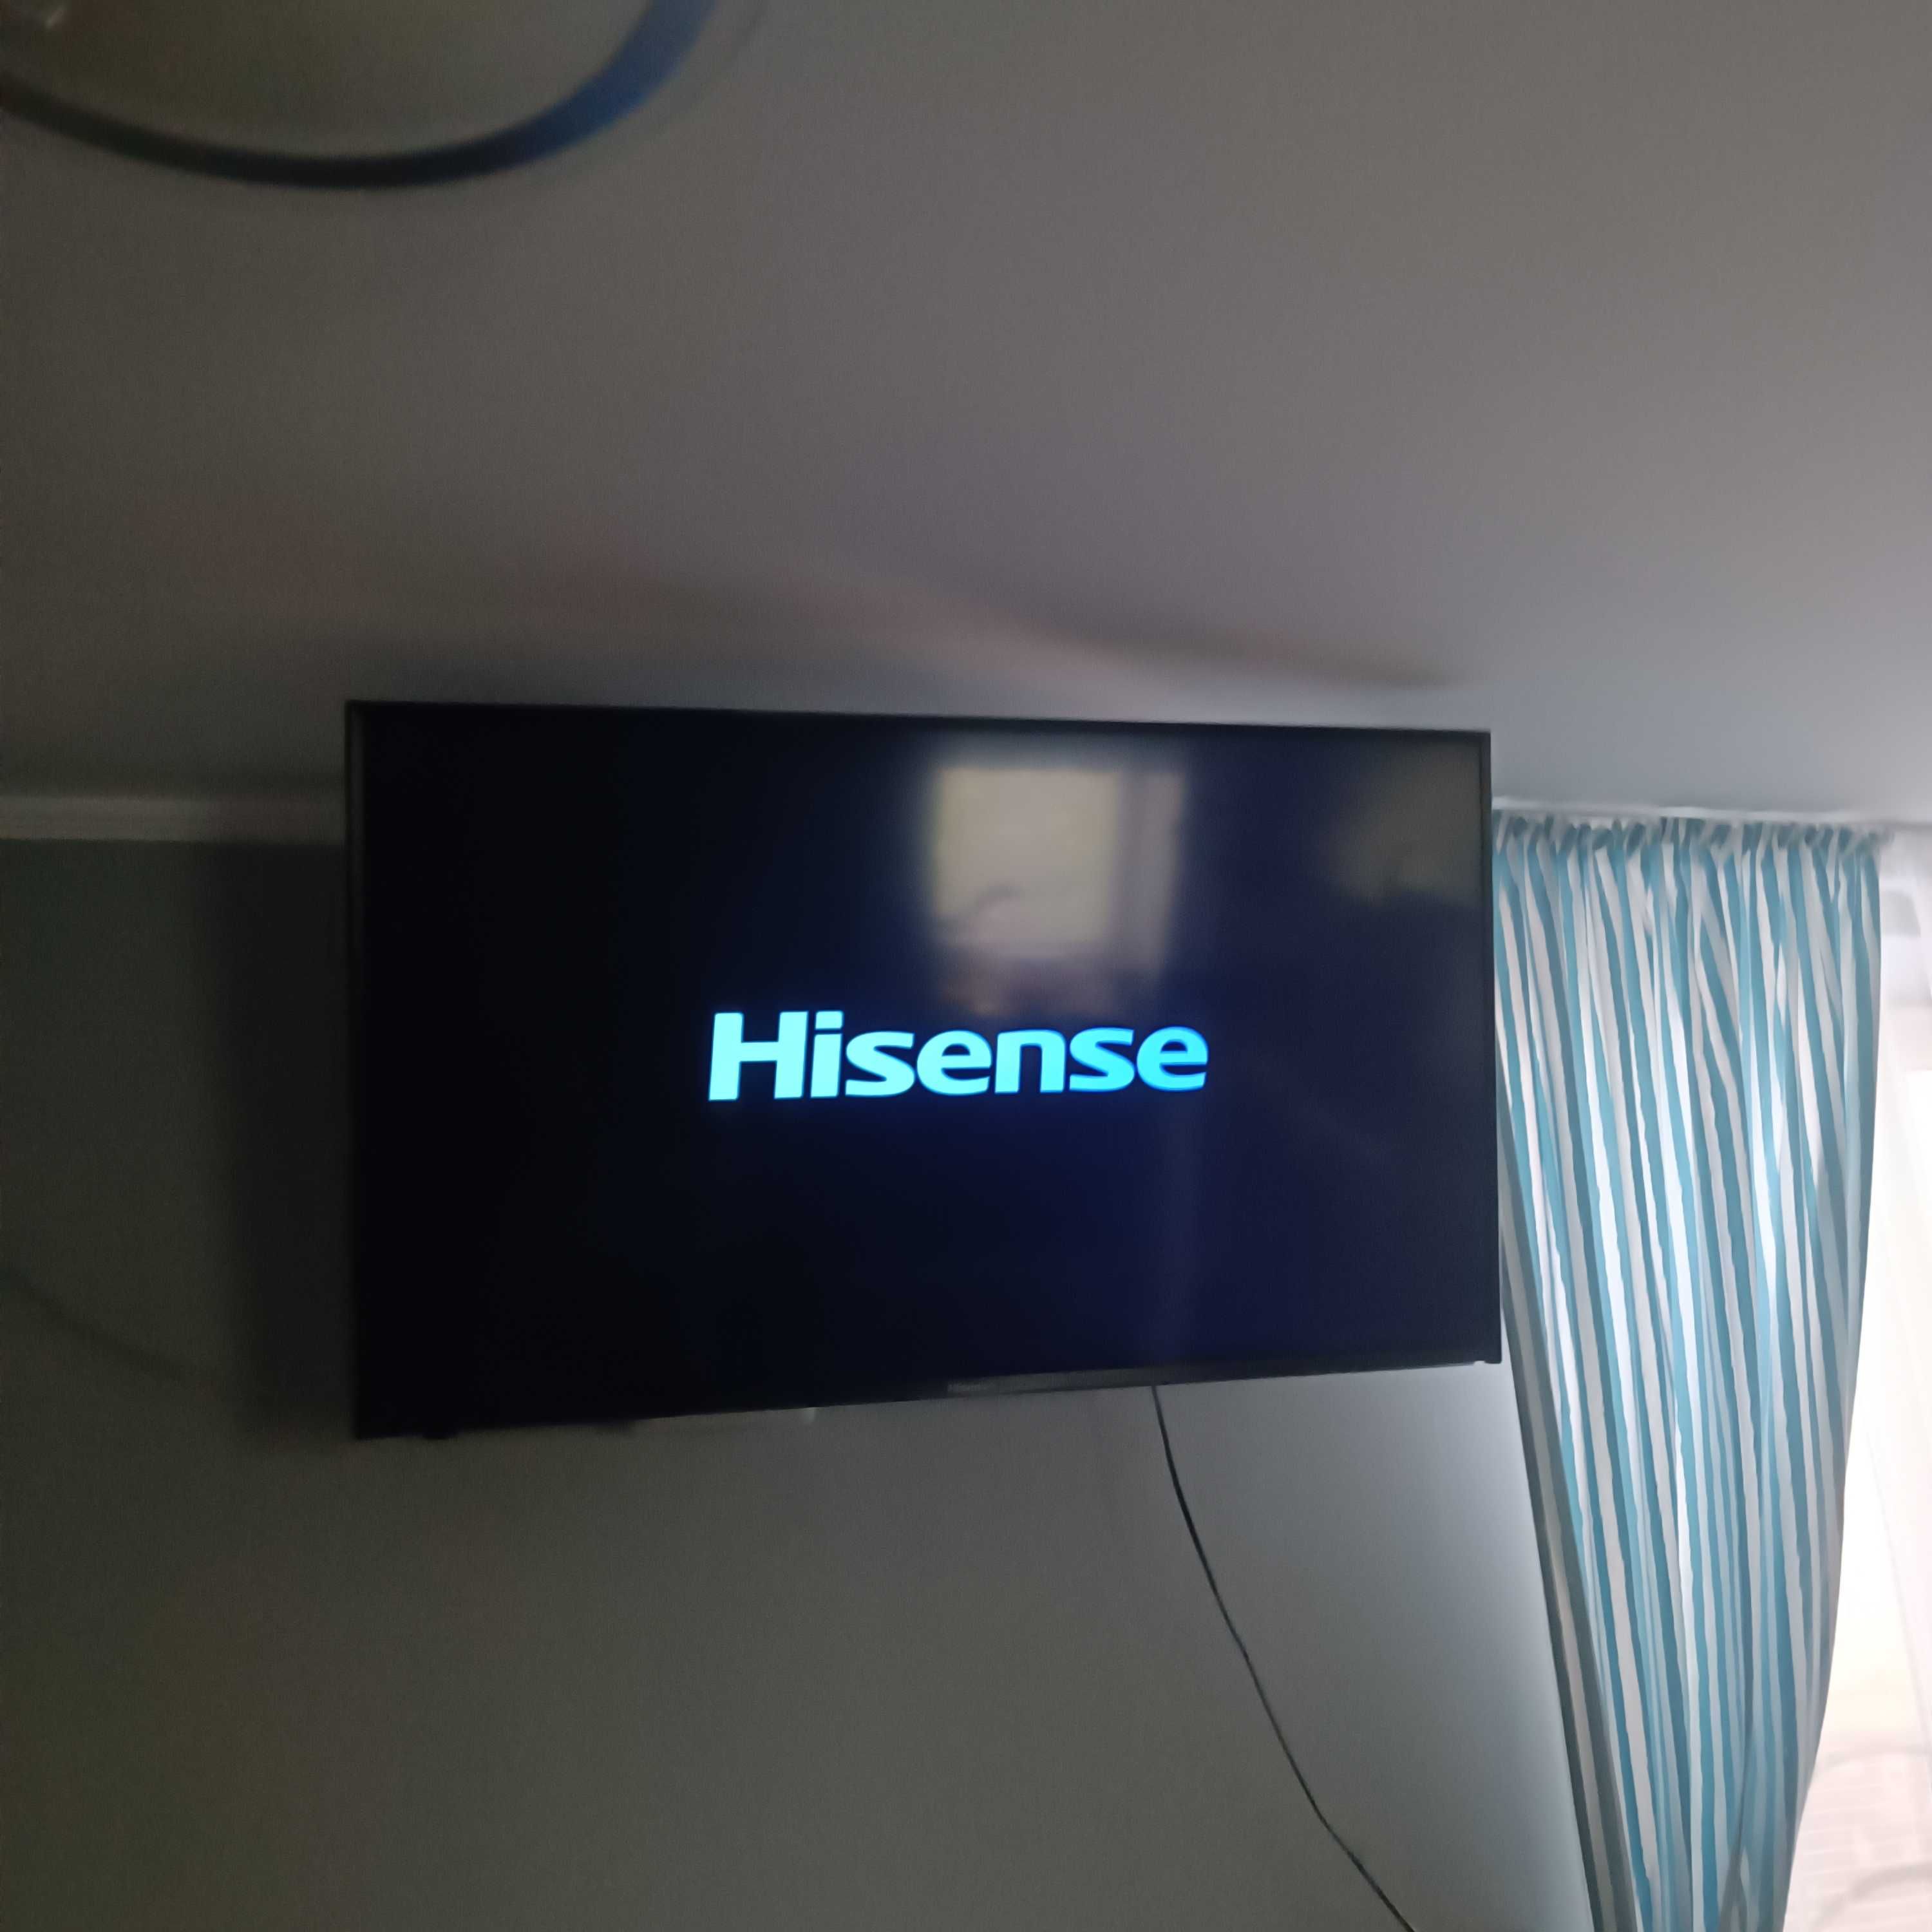 Телевізор Hisense